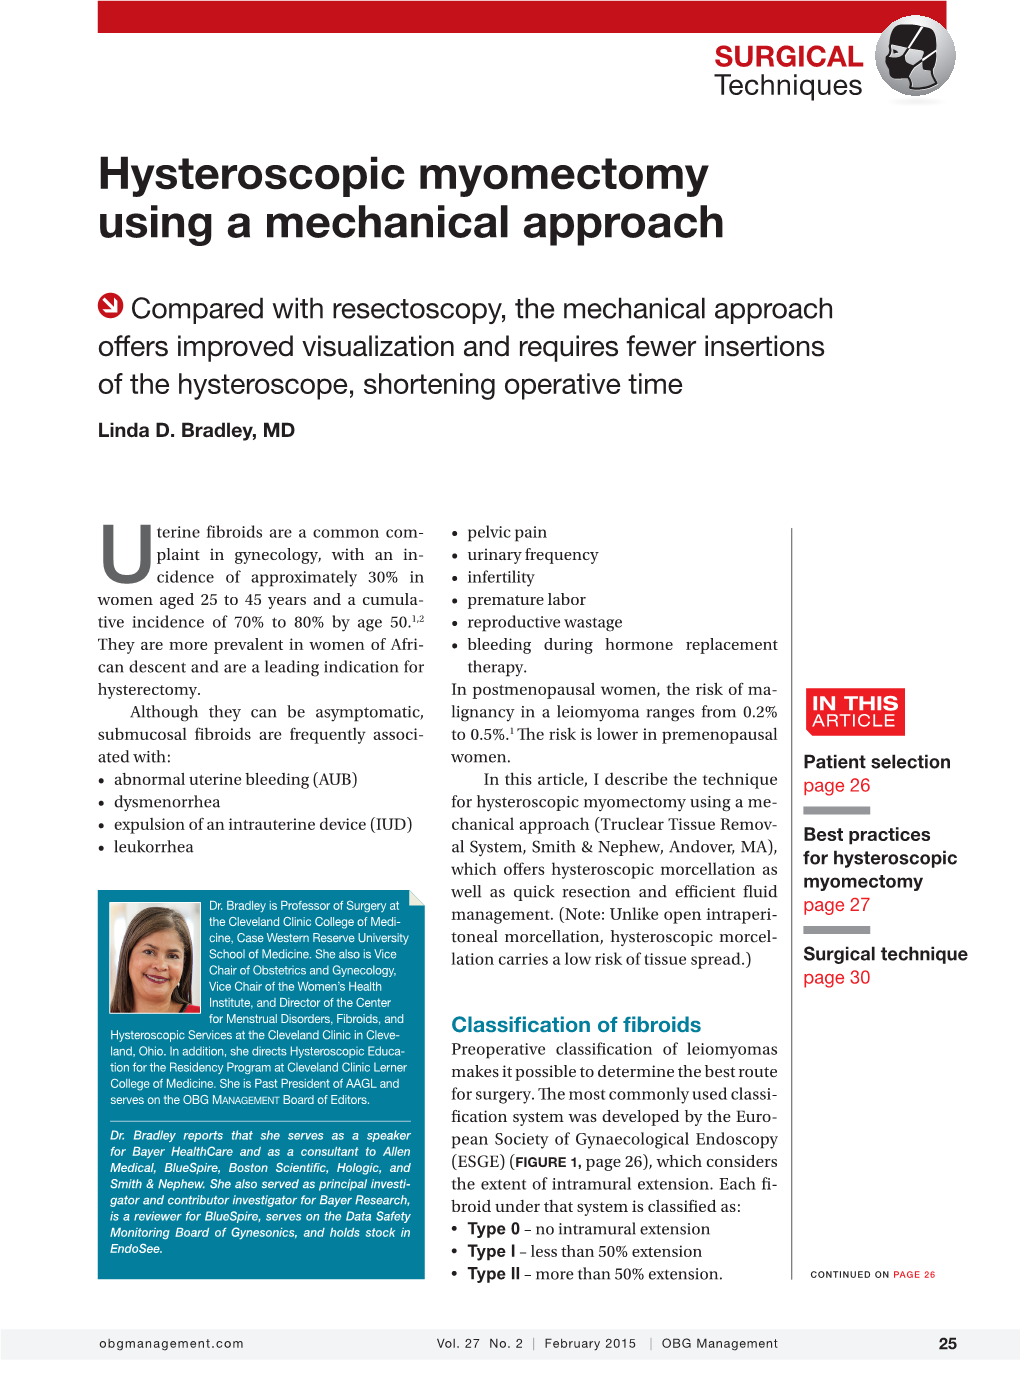 Hysteroscopic Myomectomy Using a Mechanical Approach